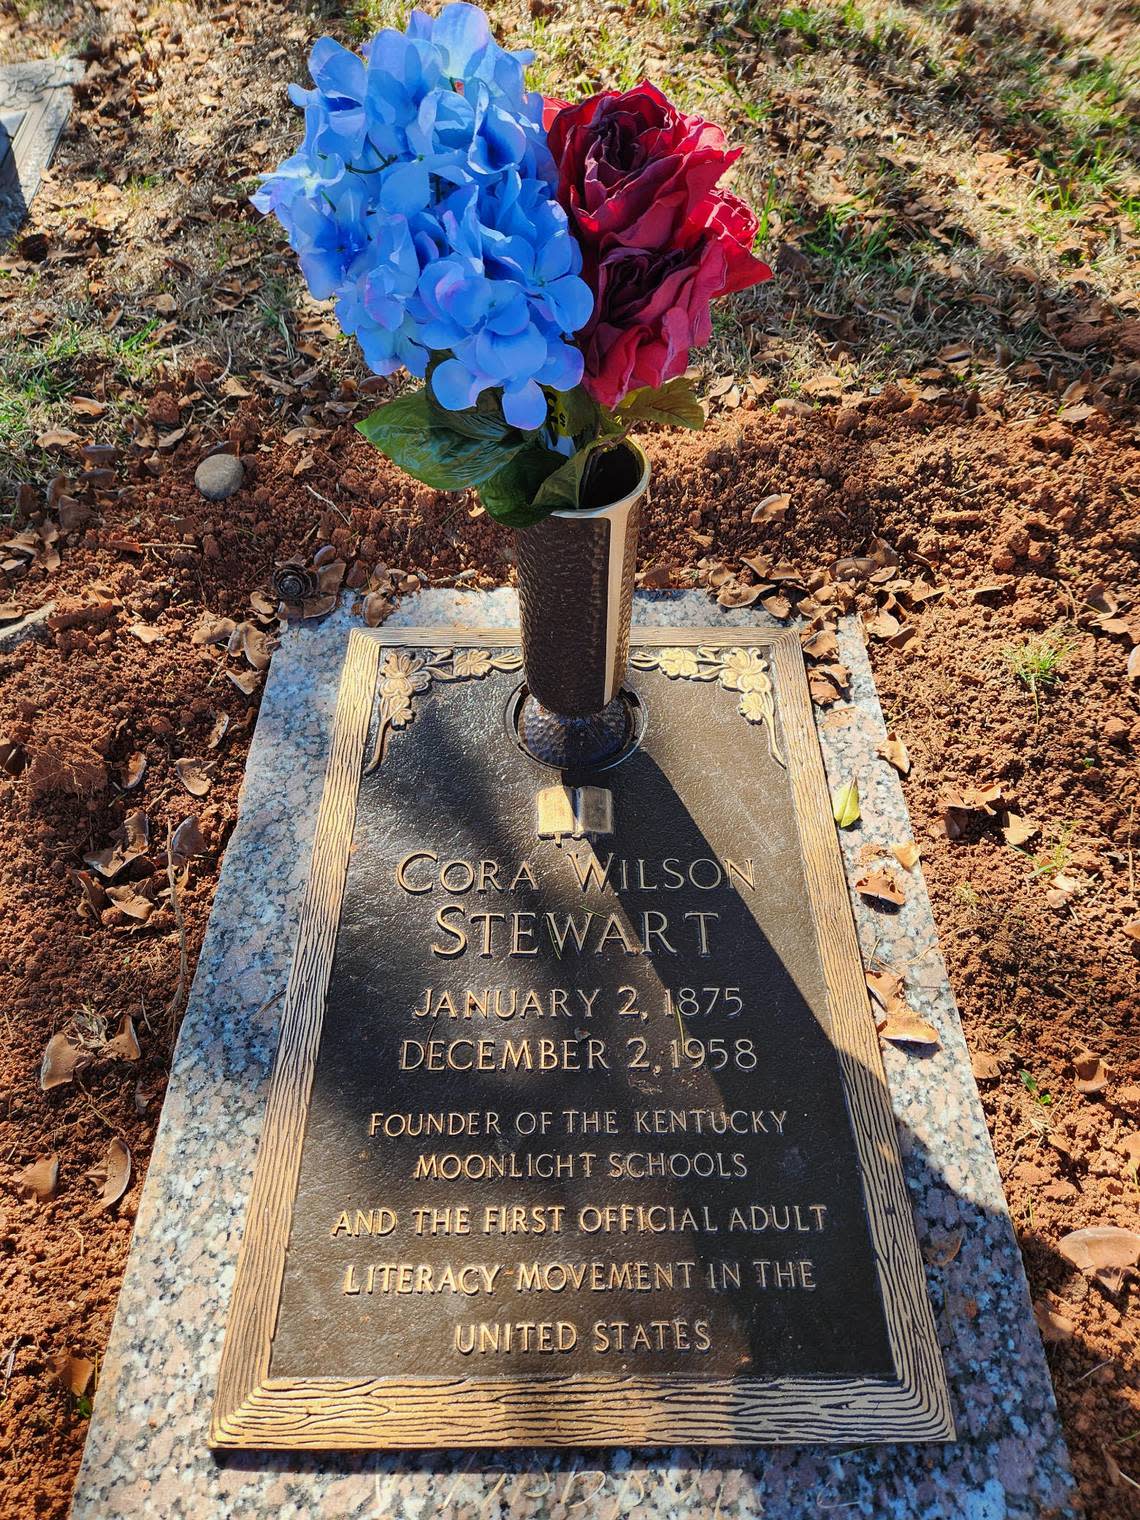 Cora Wilson Stewart’s new grave marker in Polk Memorial Gardens in Columbus, N.C., was designed by Kim Michele RIchardson. Photo courtesy of McFarland Funeral.